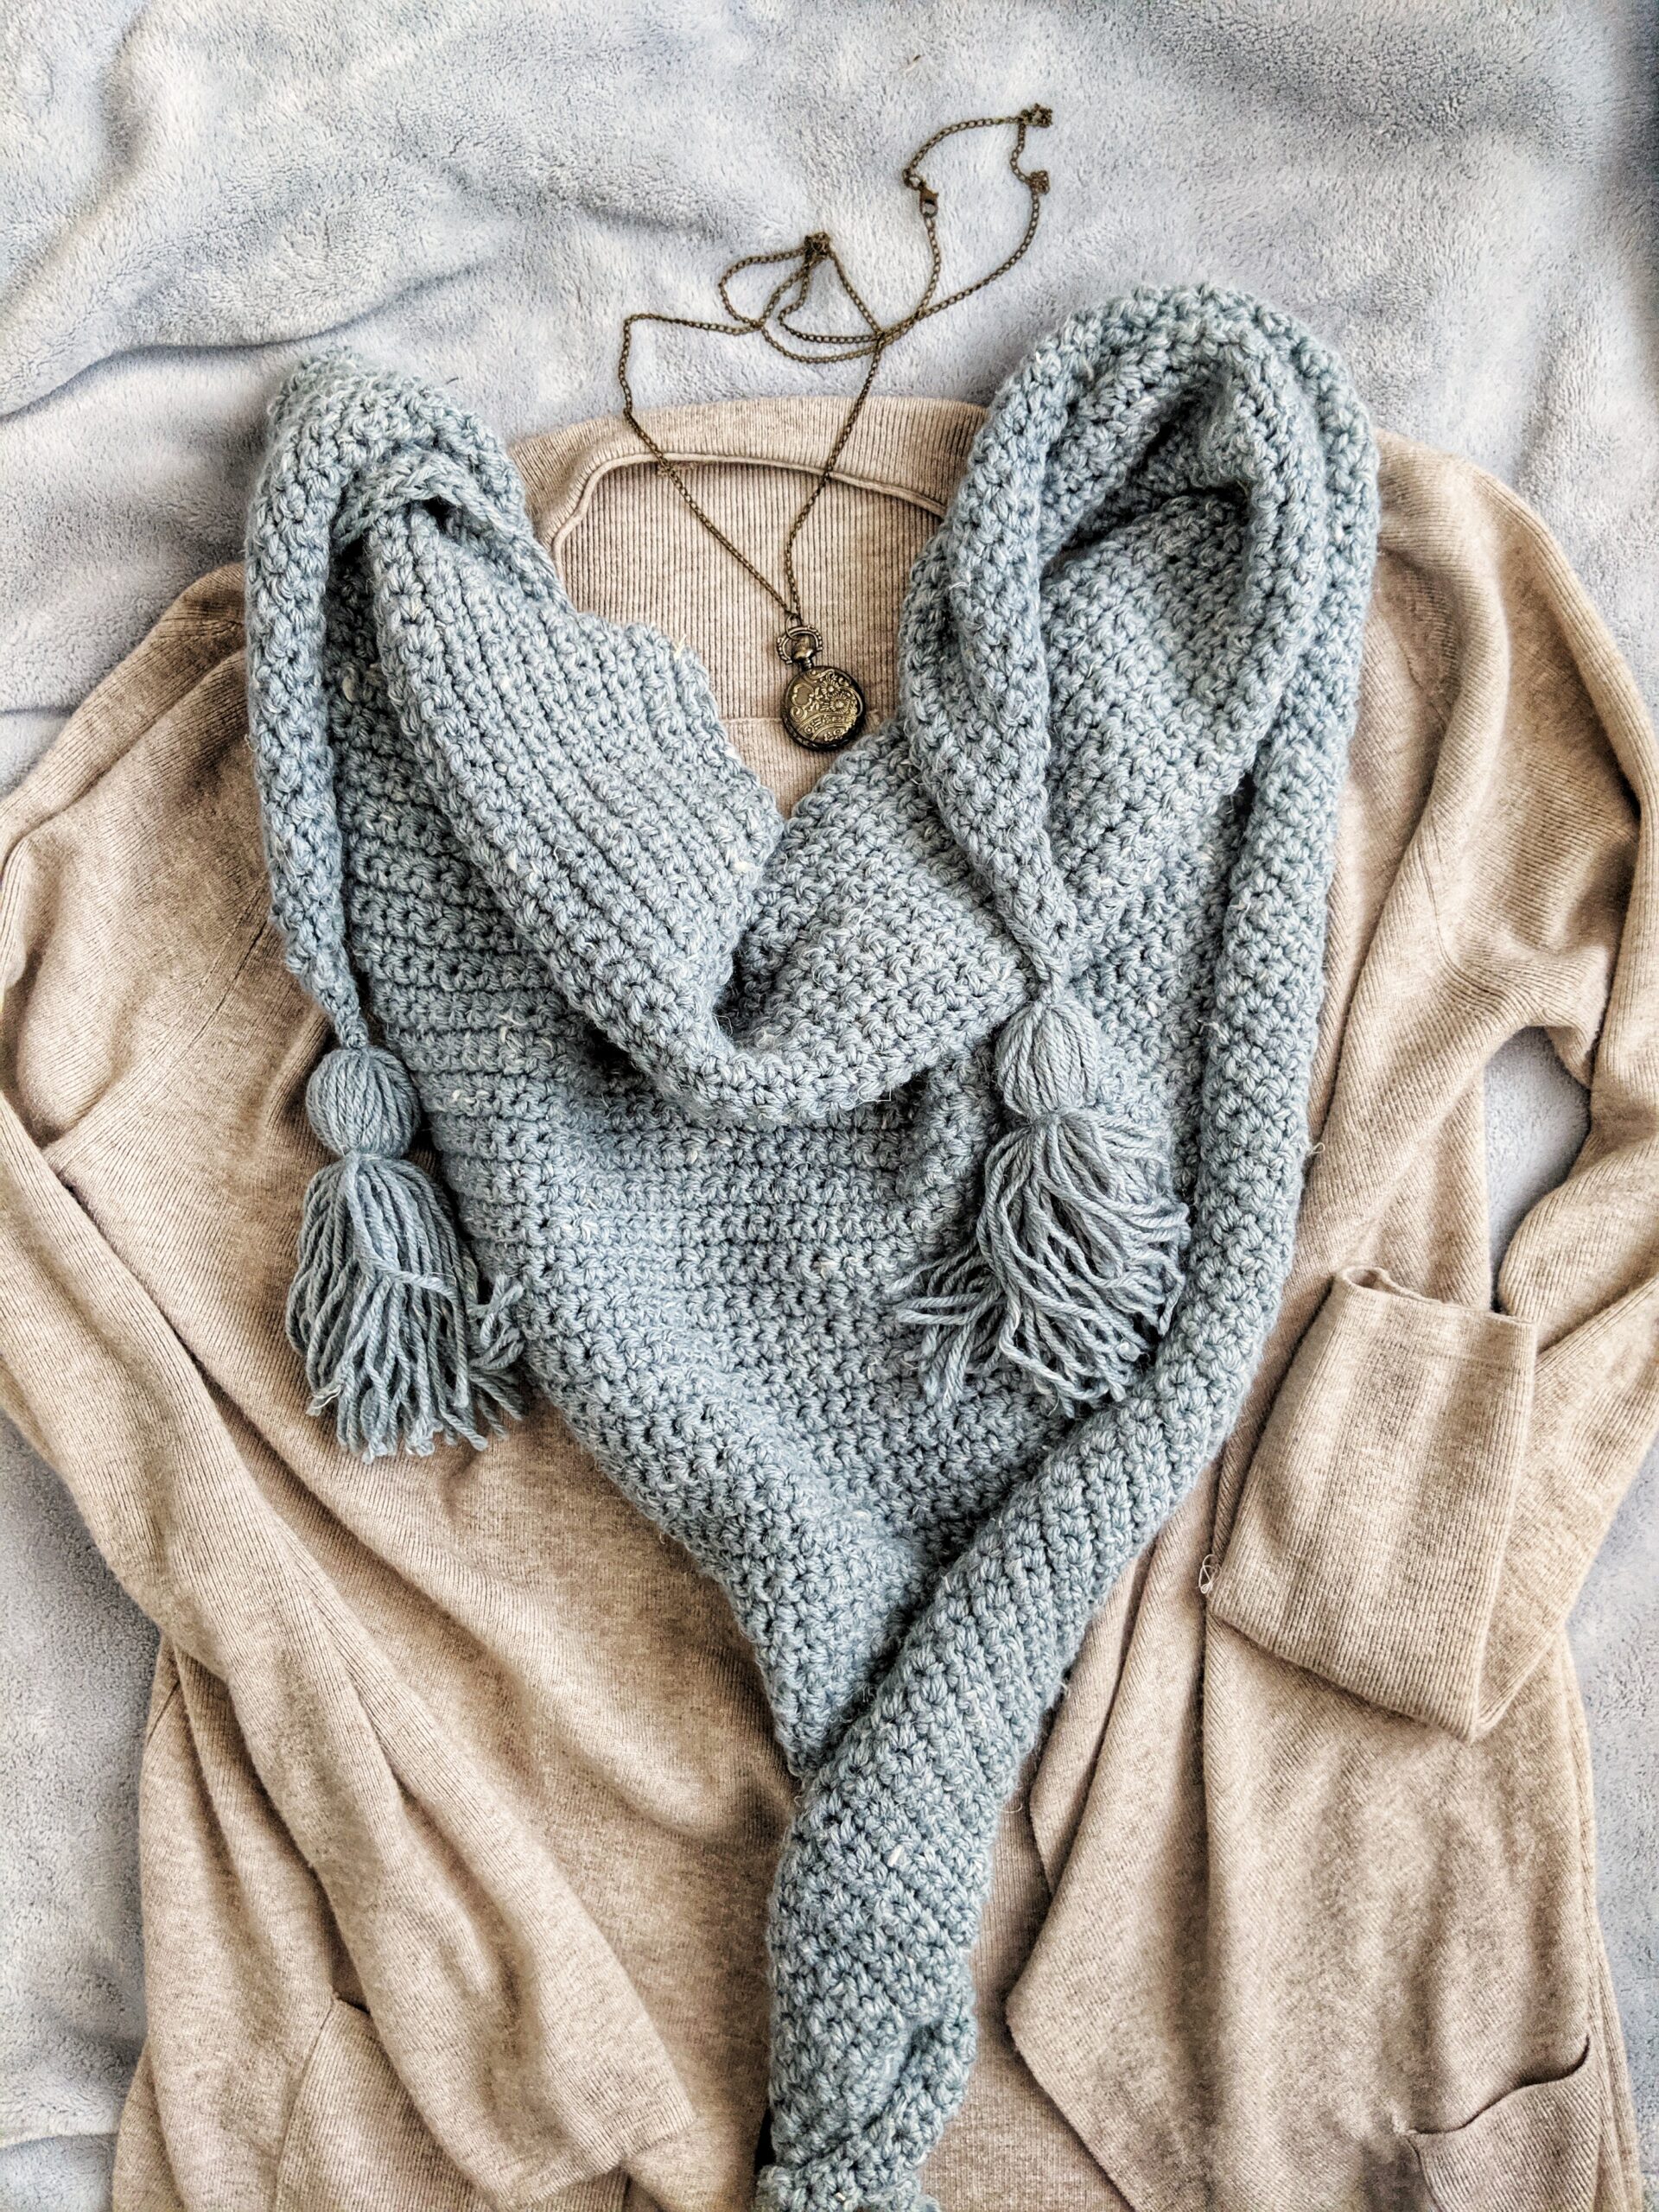 Beginner triangle scarf crochet pattern